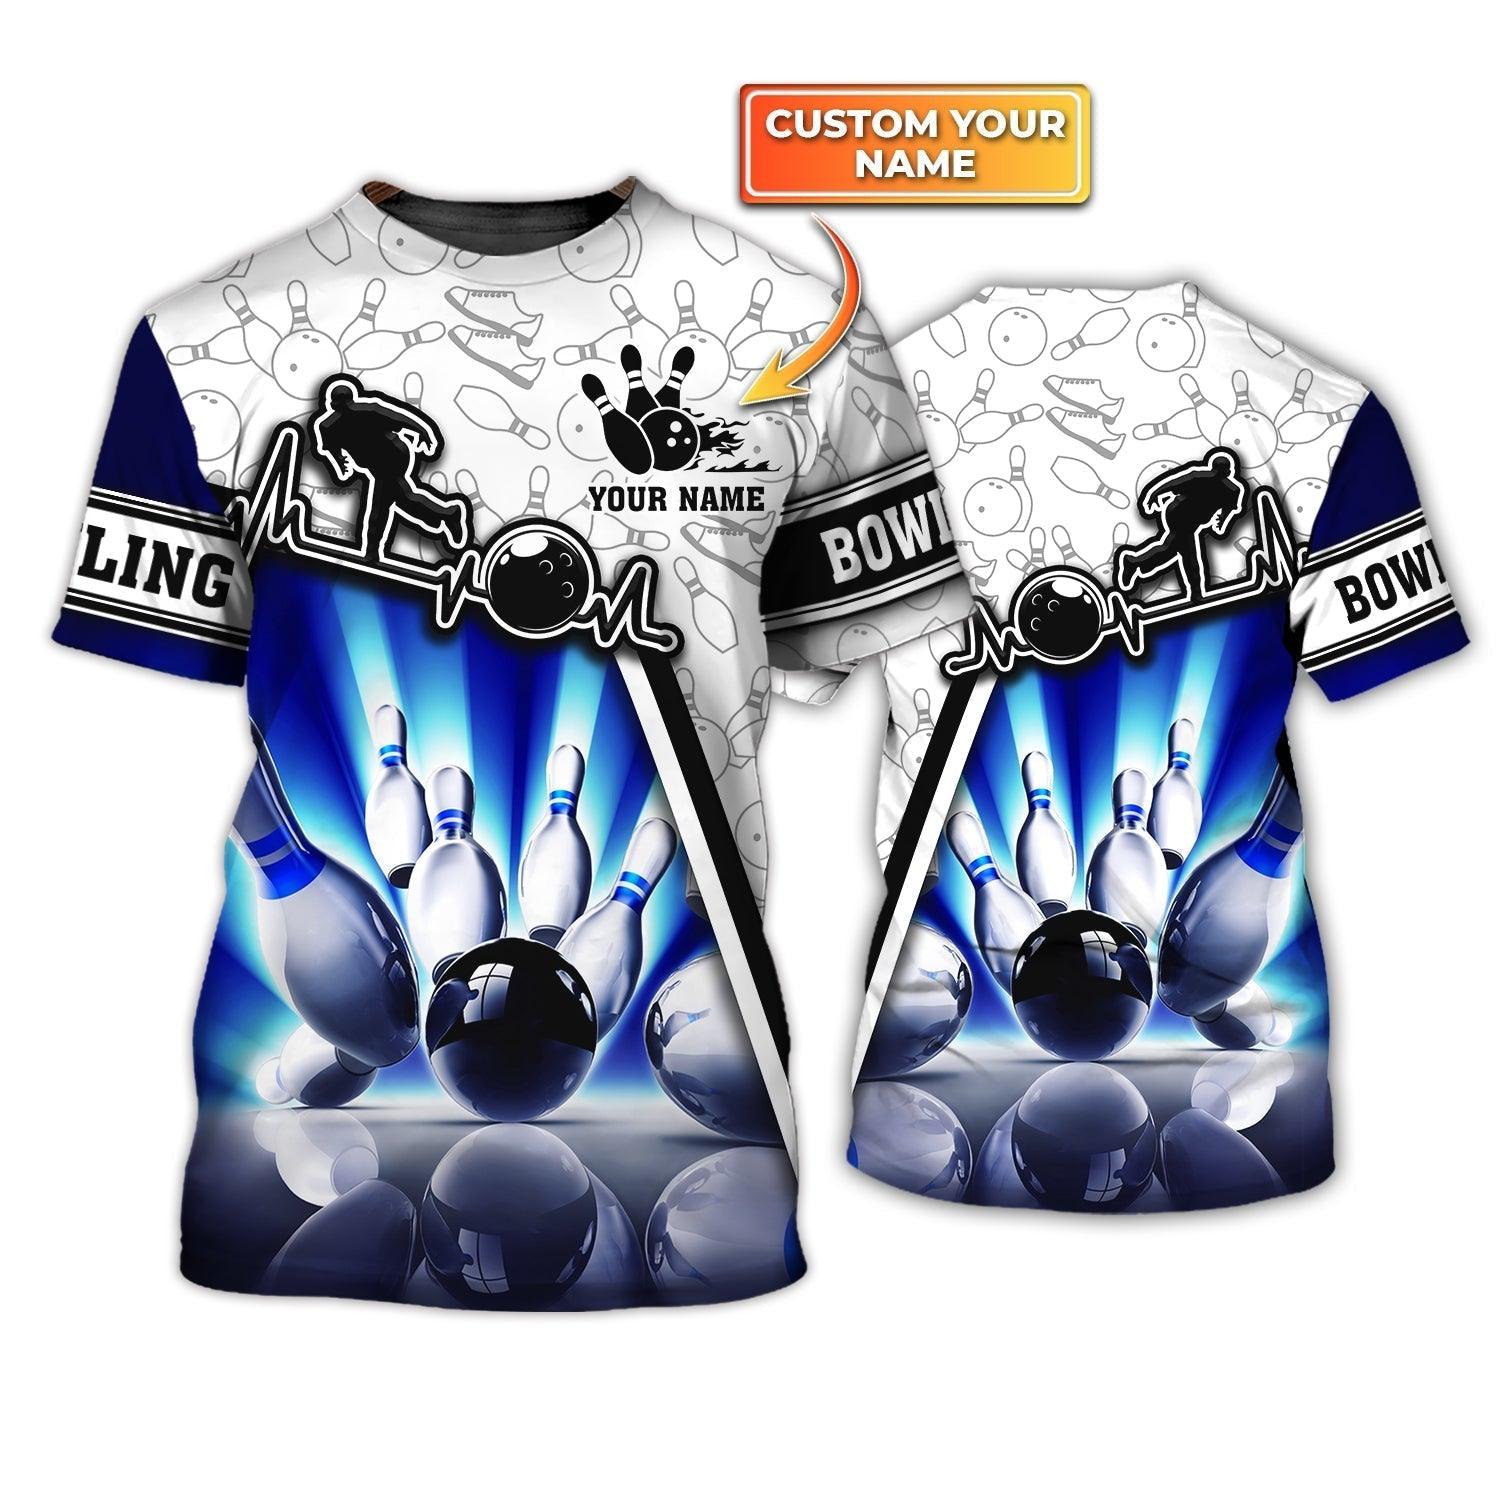 Customized Name Bowling T Shirt, Personalized Bowling T Shirt, Bowling Dad Shirts - Perfect Gift For Men, Bowlers, Bowling Team - Amzanimalsgift